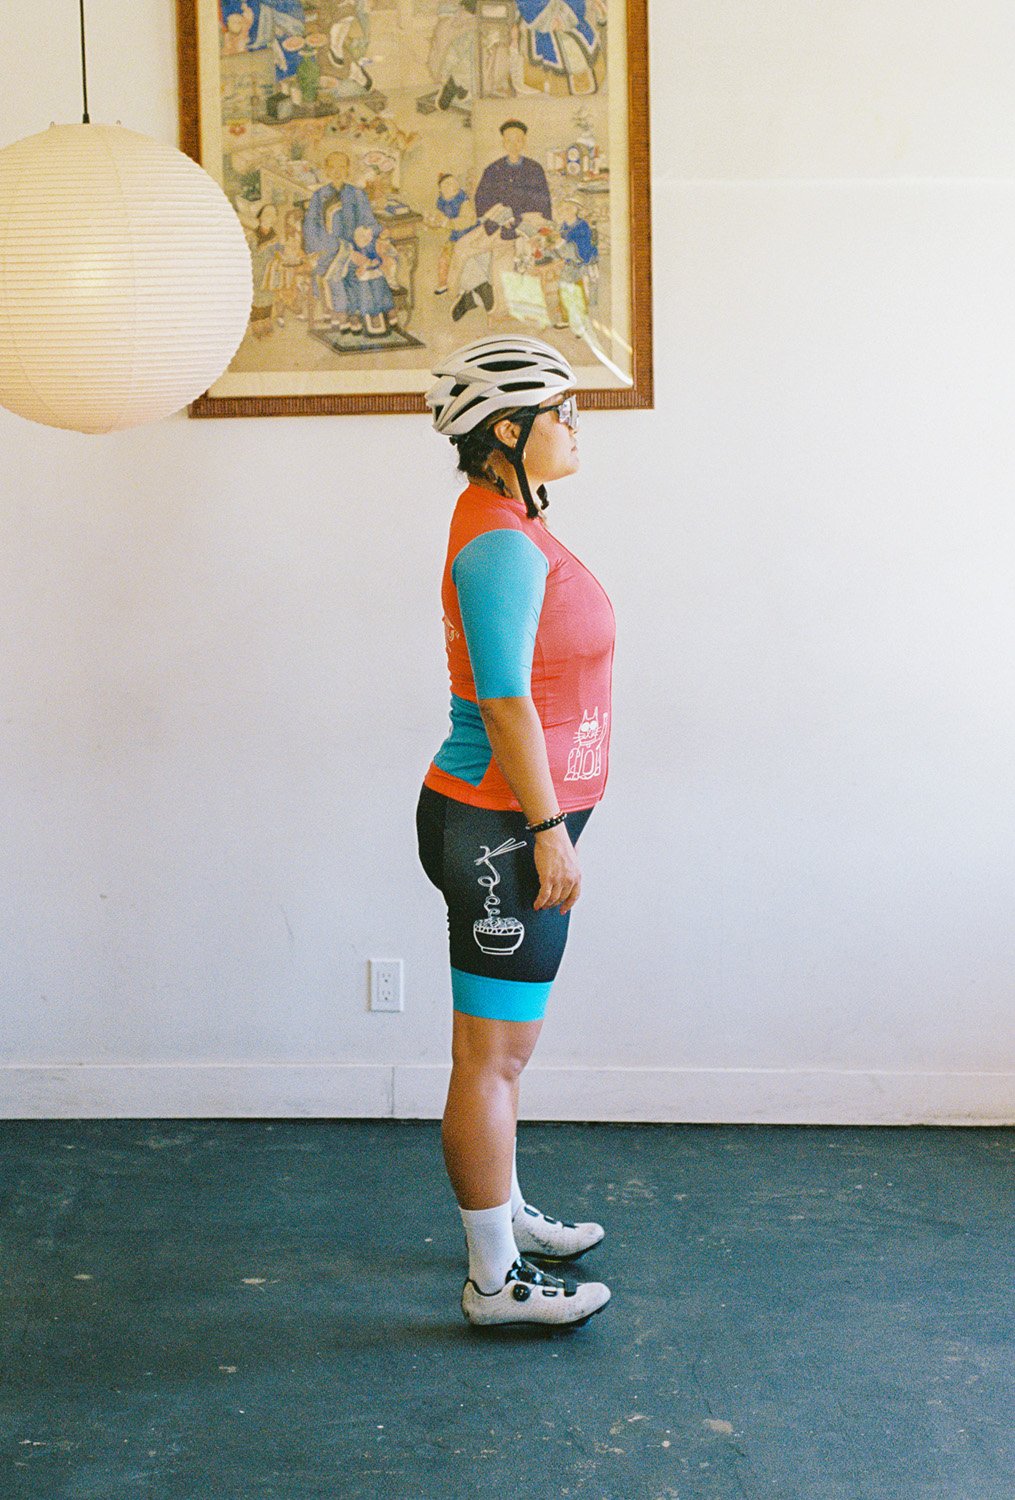 A woman wearing a cycling uniform